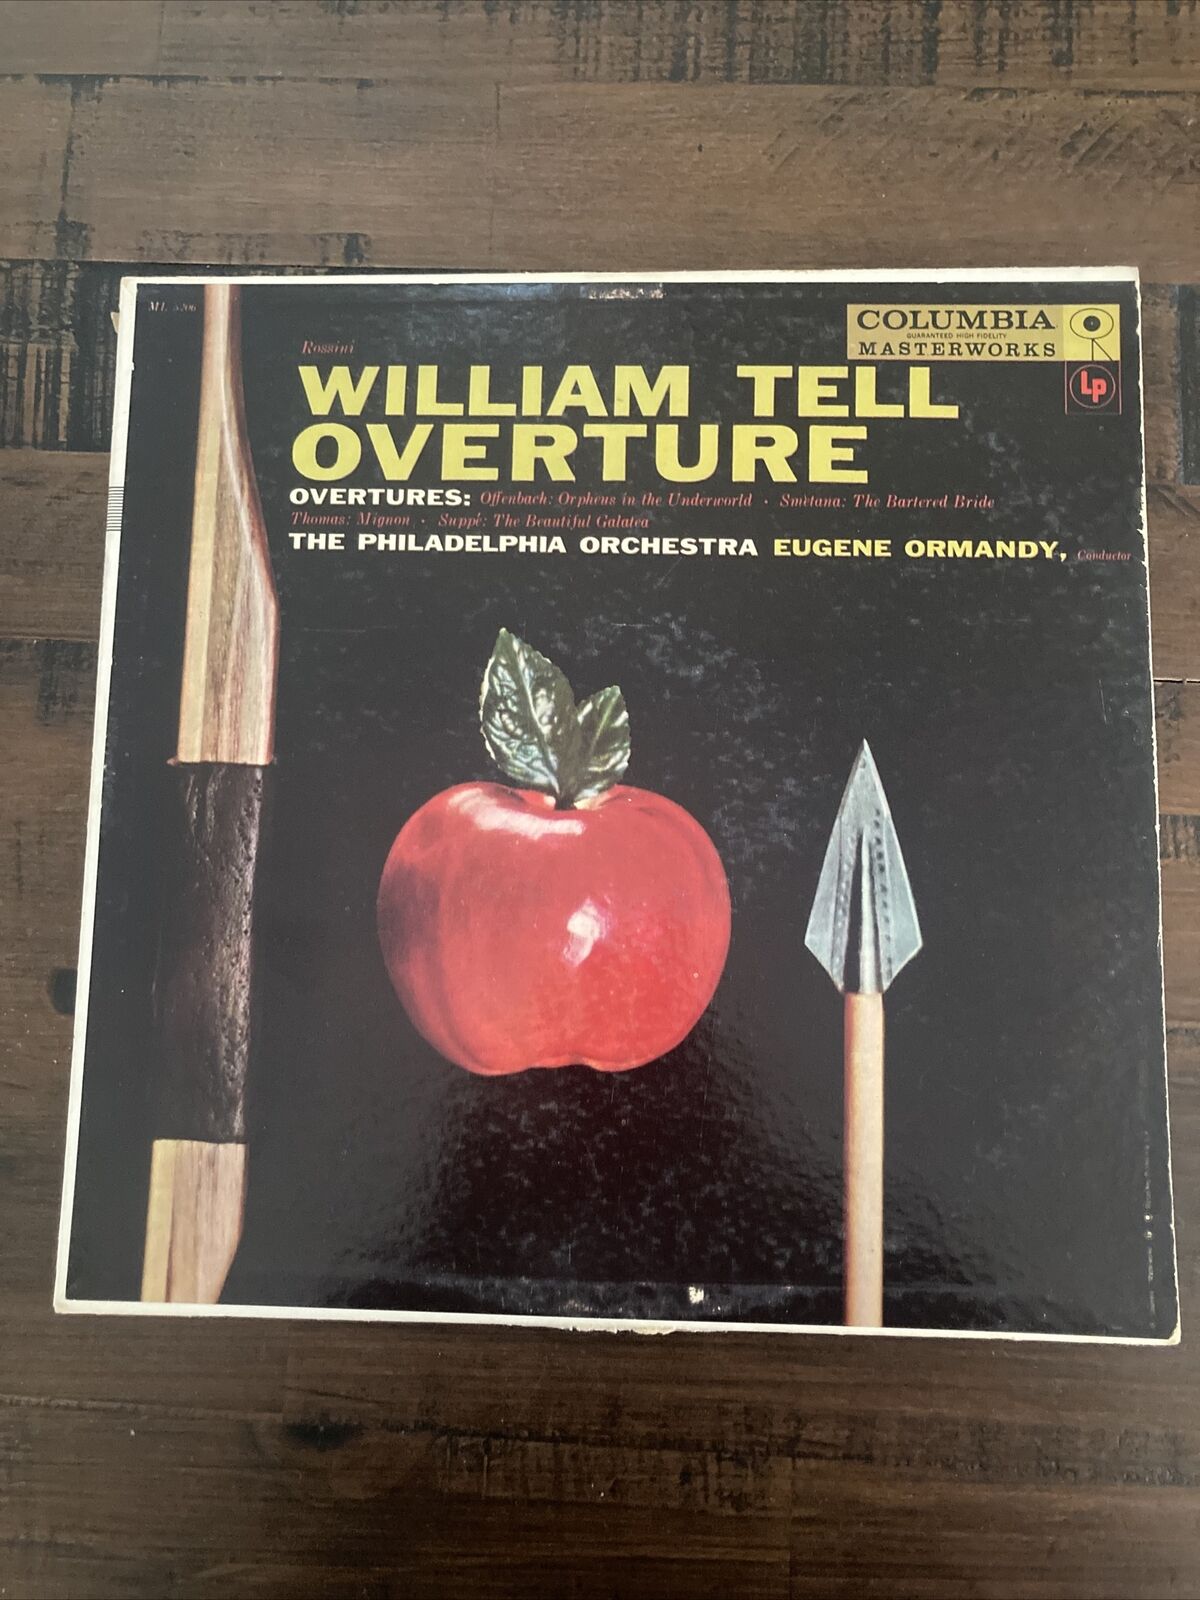 Rossini: William Tell Overture The Philadelphia Orchestra. Eugene Ormandy LP